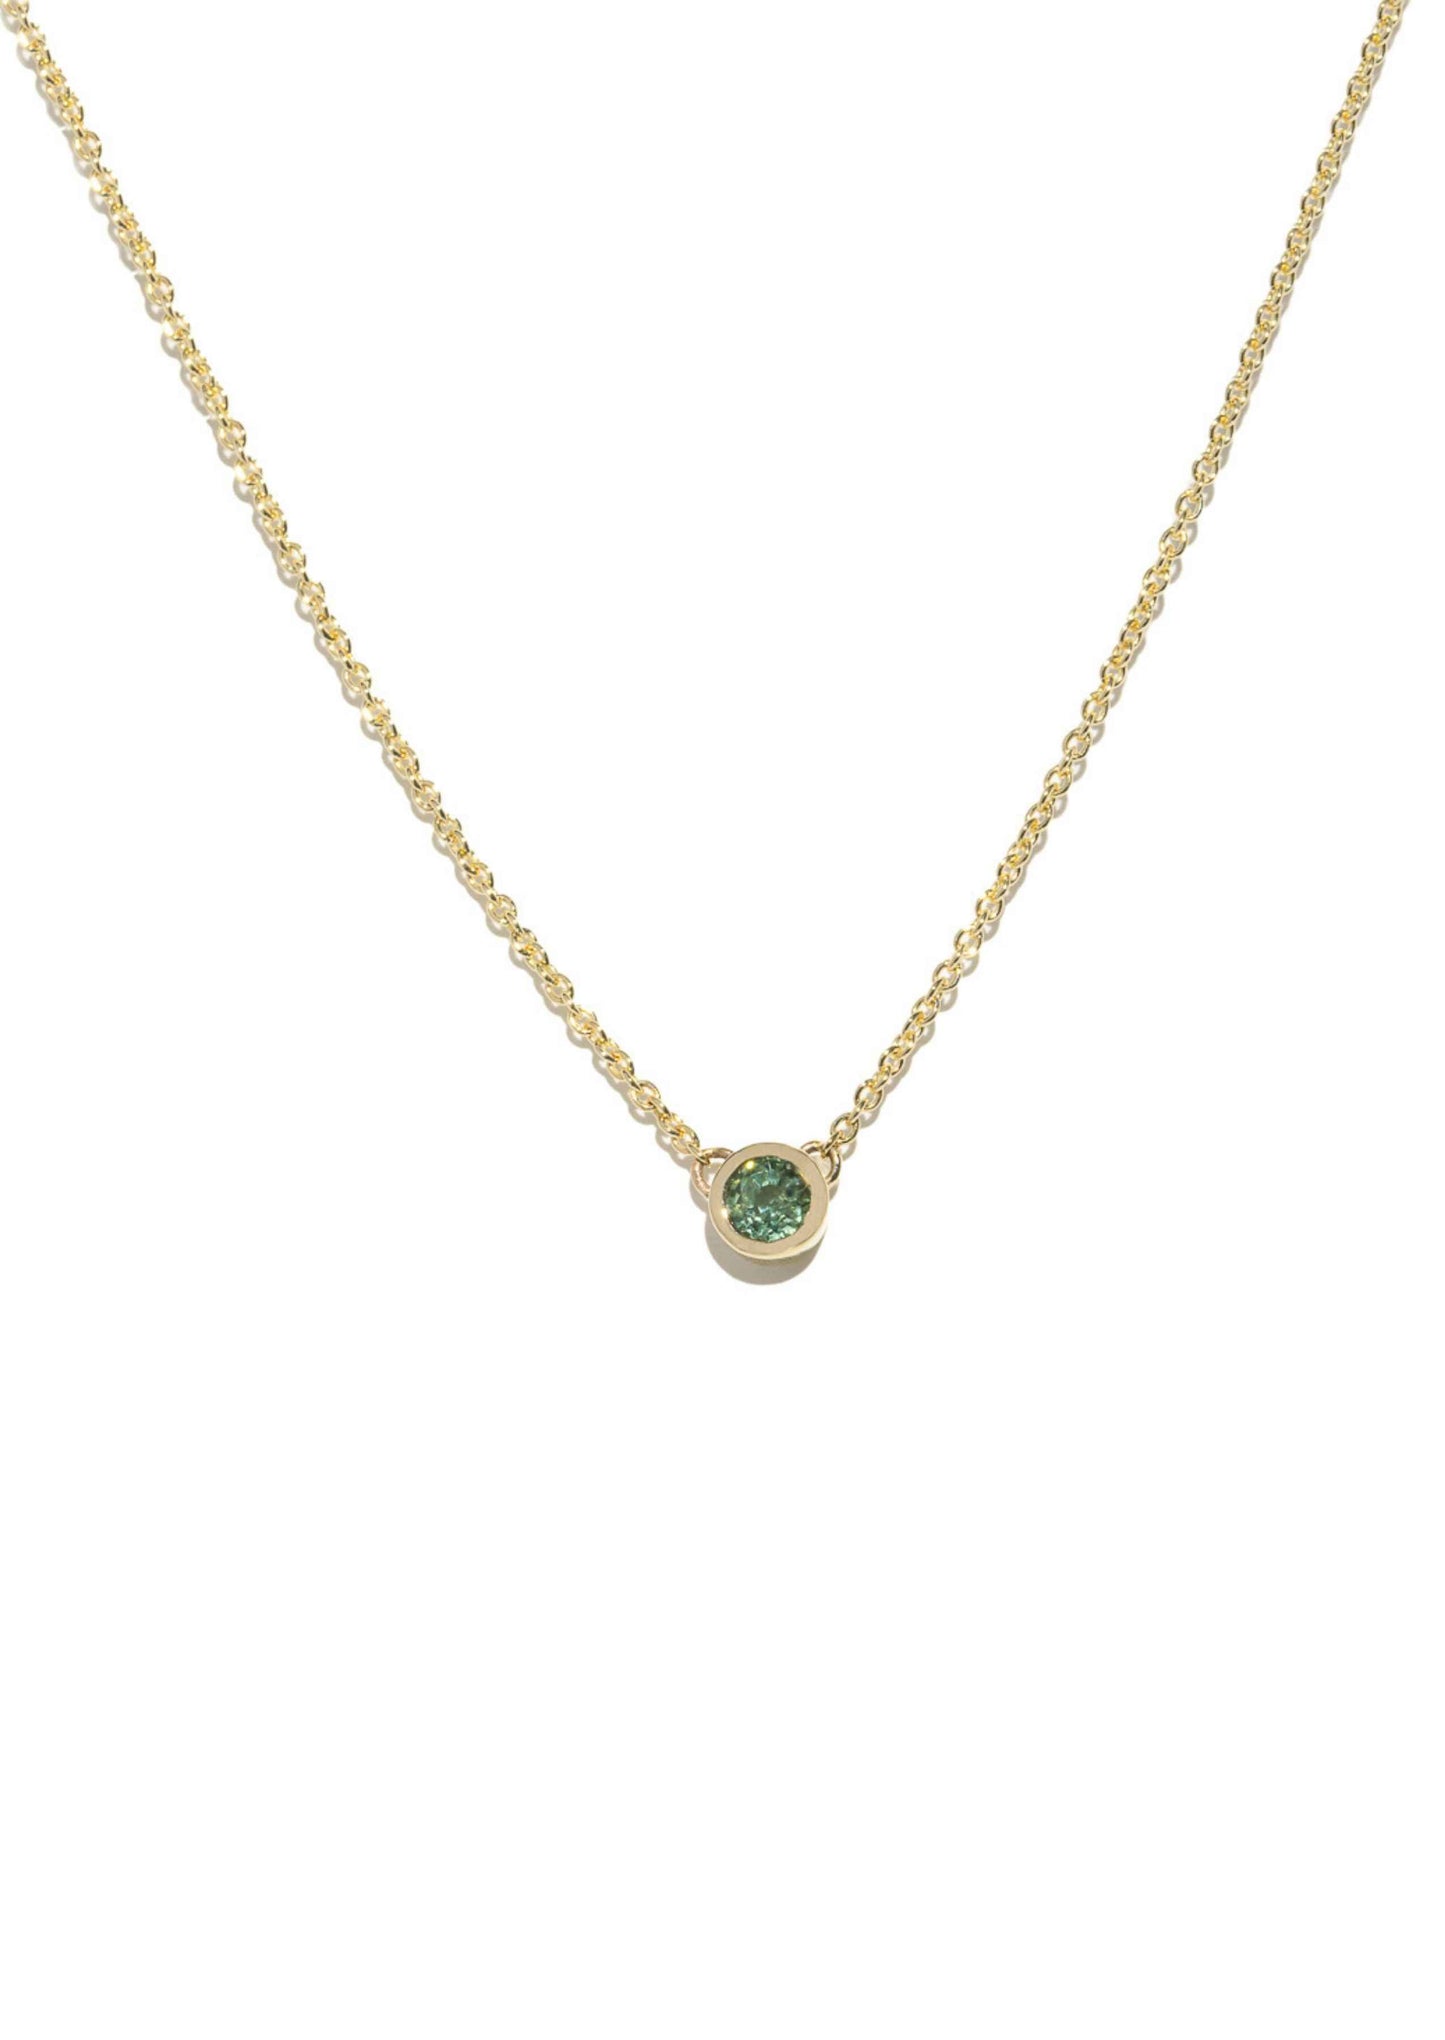 The Arda Parti Sapphire Pendant Necklace